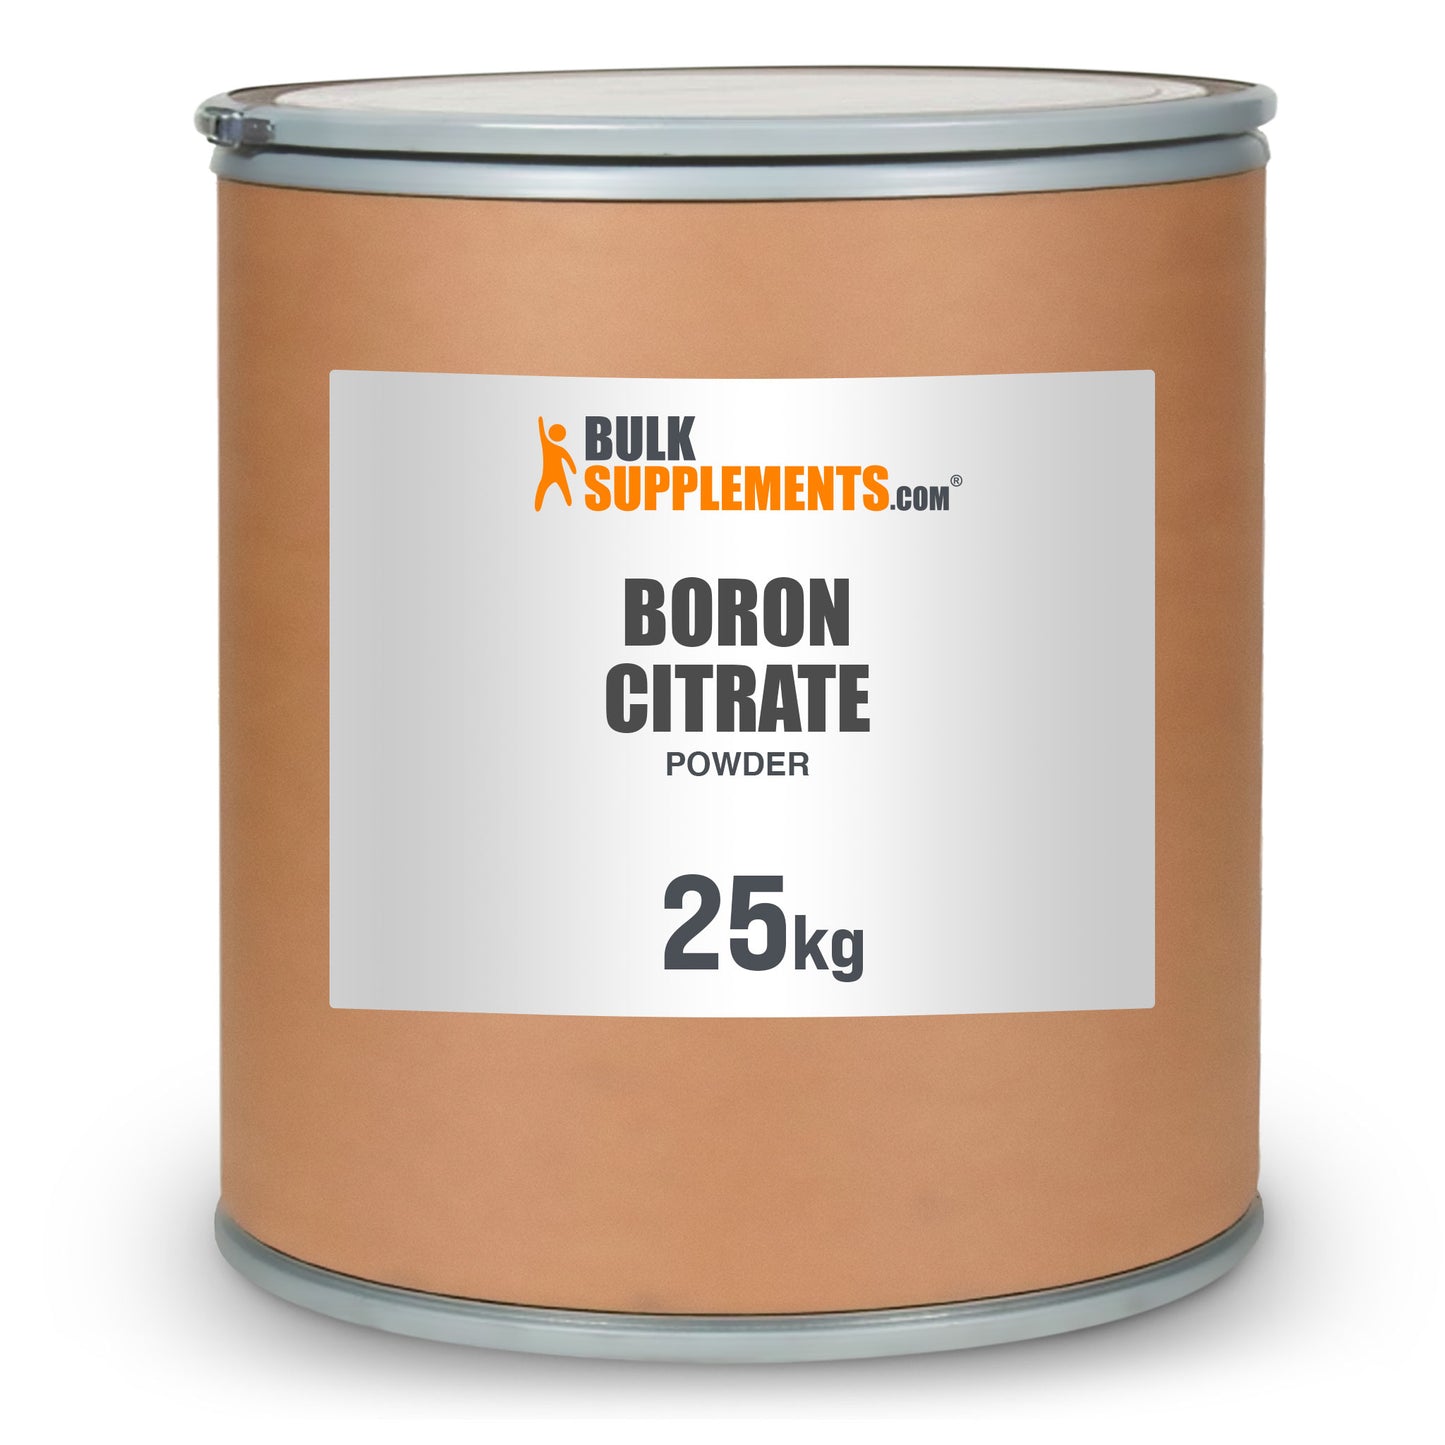 Boron Citrate powder 25kg barrel image